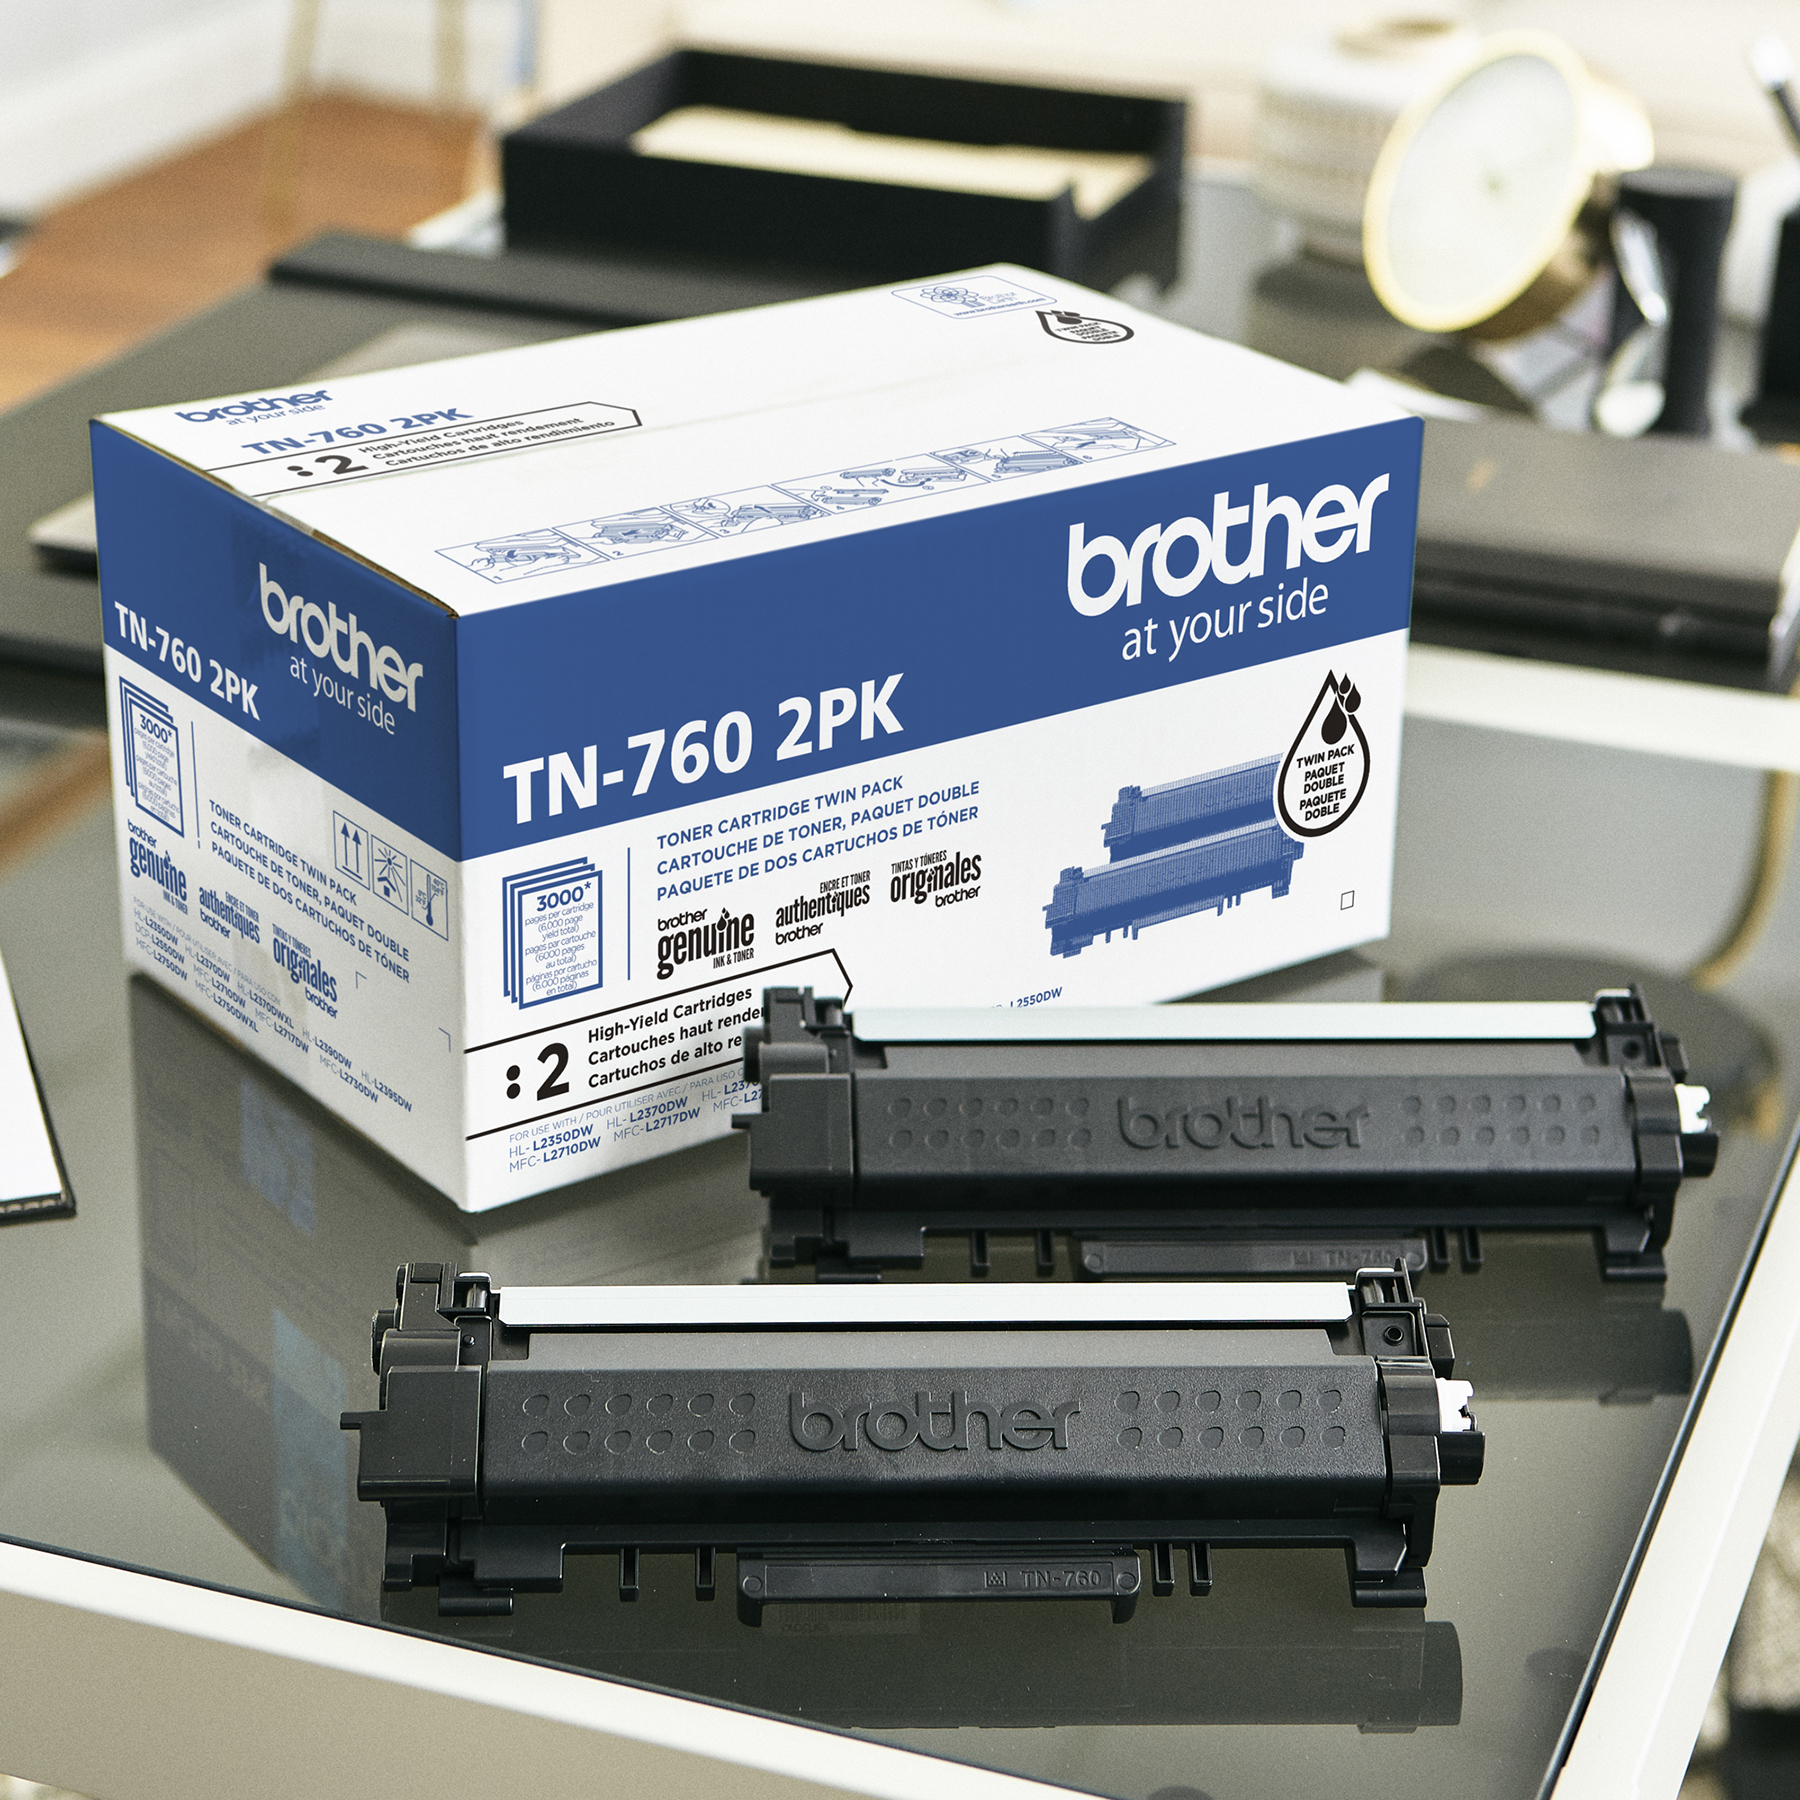 Brother MFC-L2710DW Imprimante multifonction laser compacte - Brother Canada